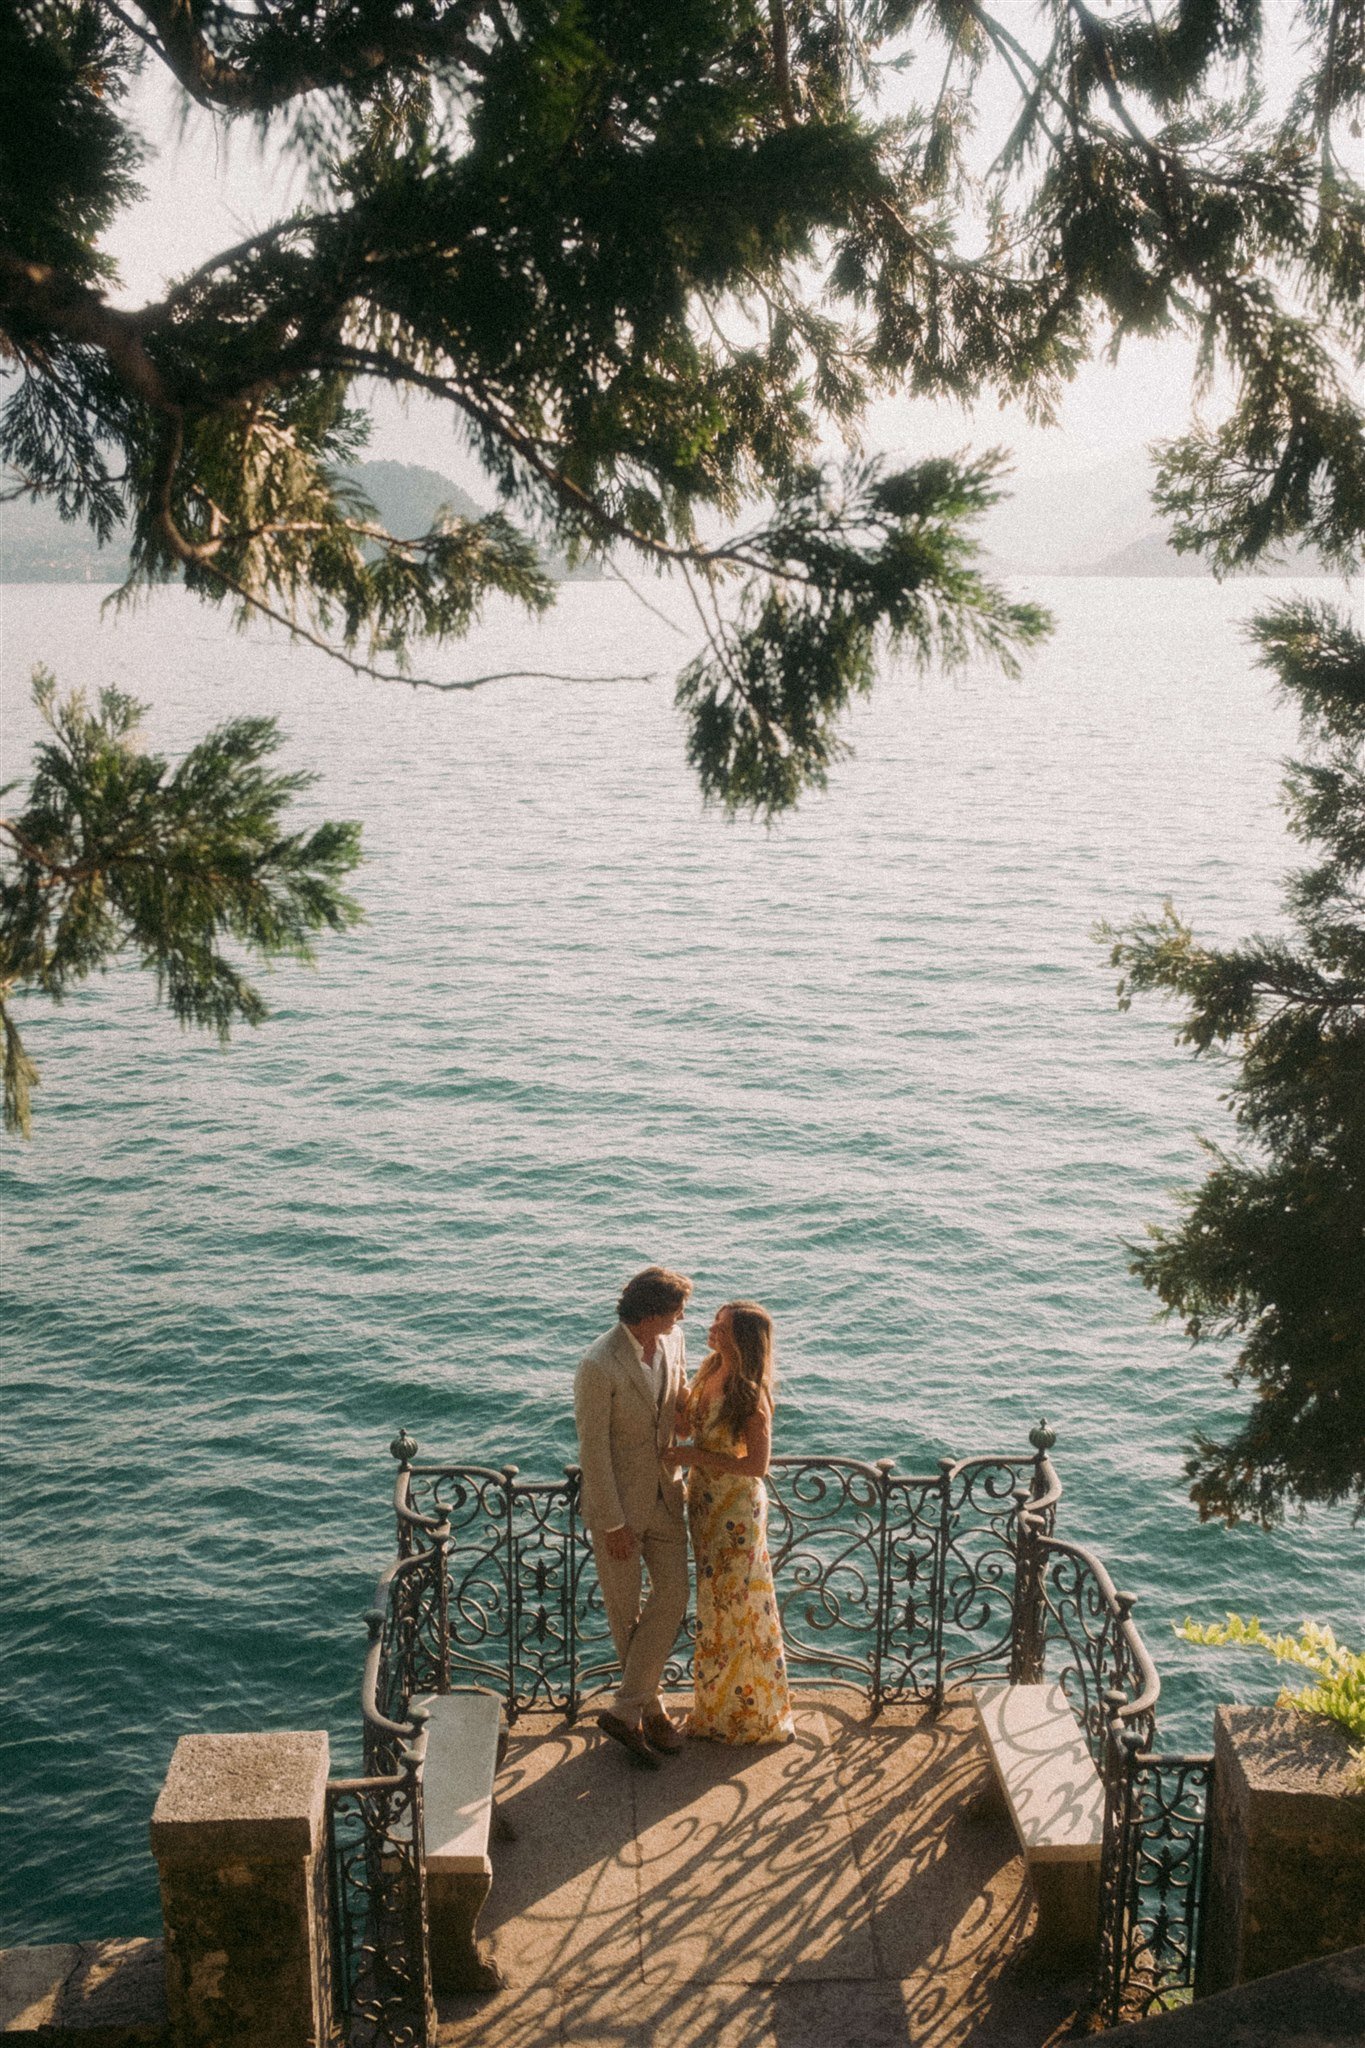 villa monastero lake como italy wedding engagement session portrait